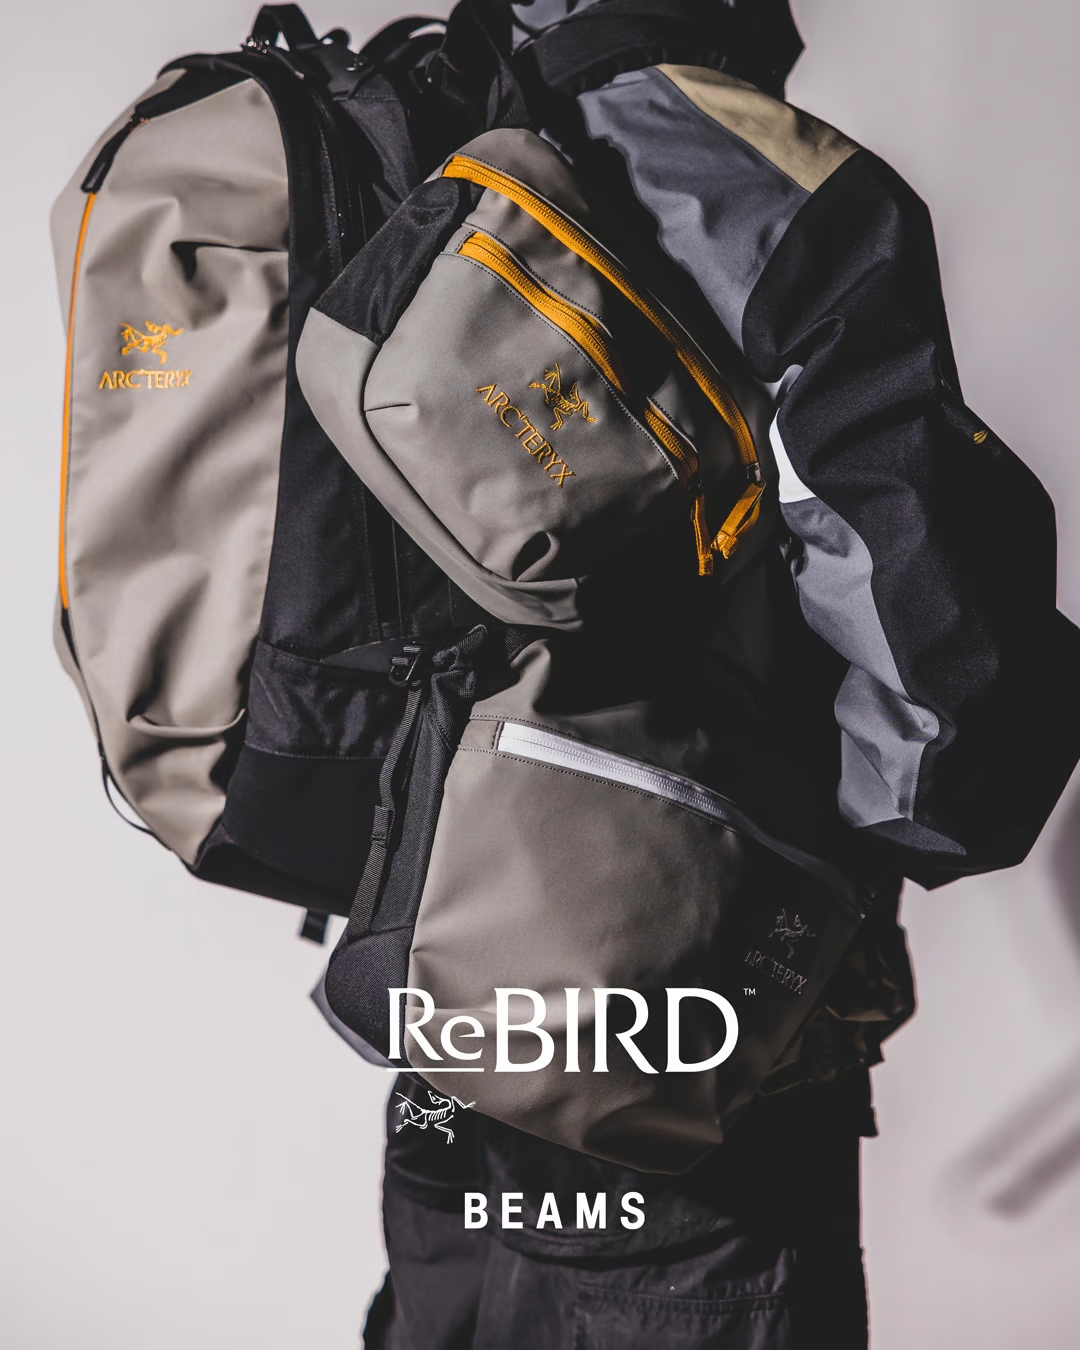 BEAMS x ARC’TERYX ARRO ReBIRD COLLECTION 2月17日発売/2月10日先行予約受付開始